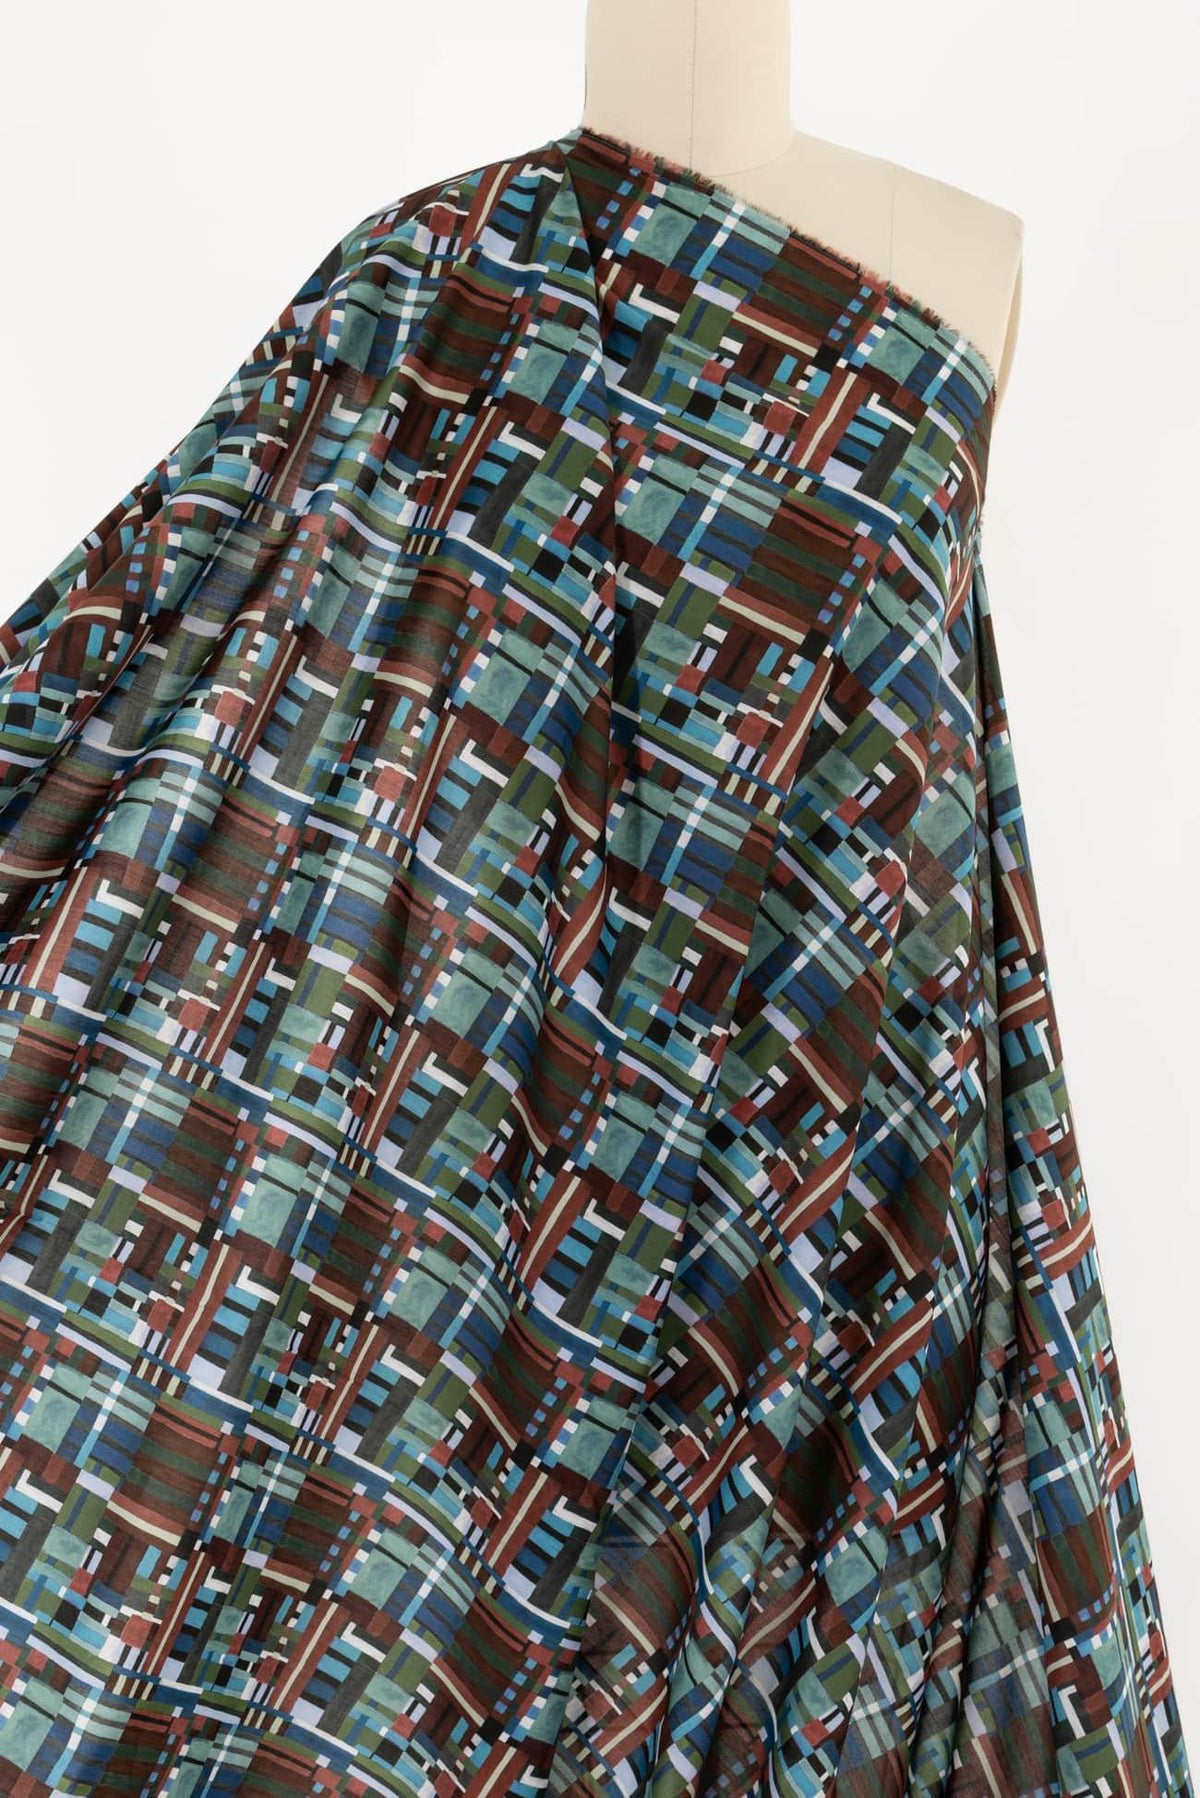 Urbane Grid Liberty Cotton Woven - Marcy Tilton Fabrics